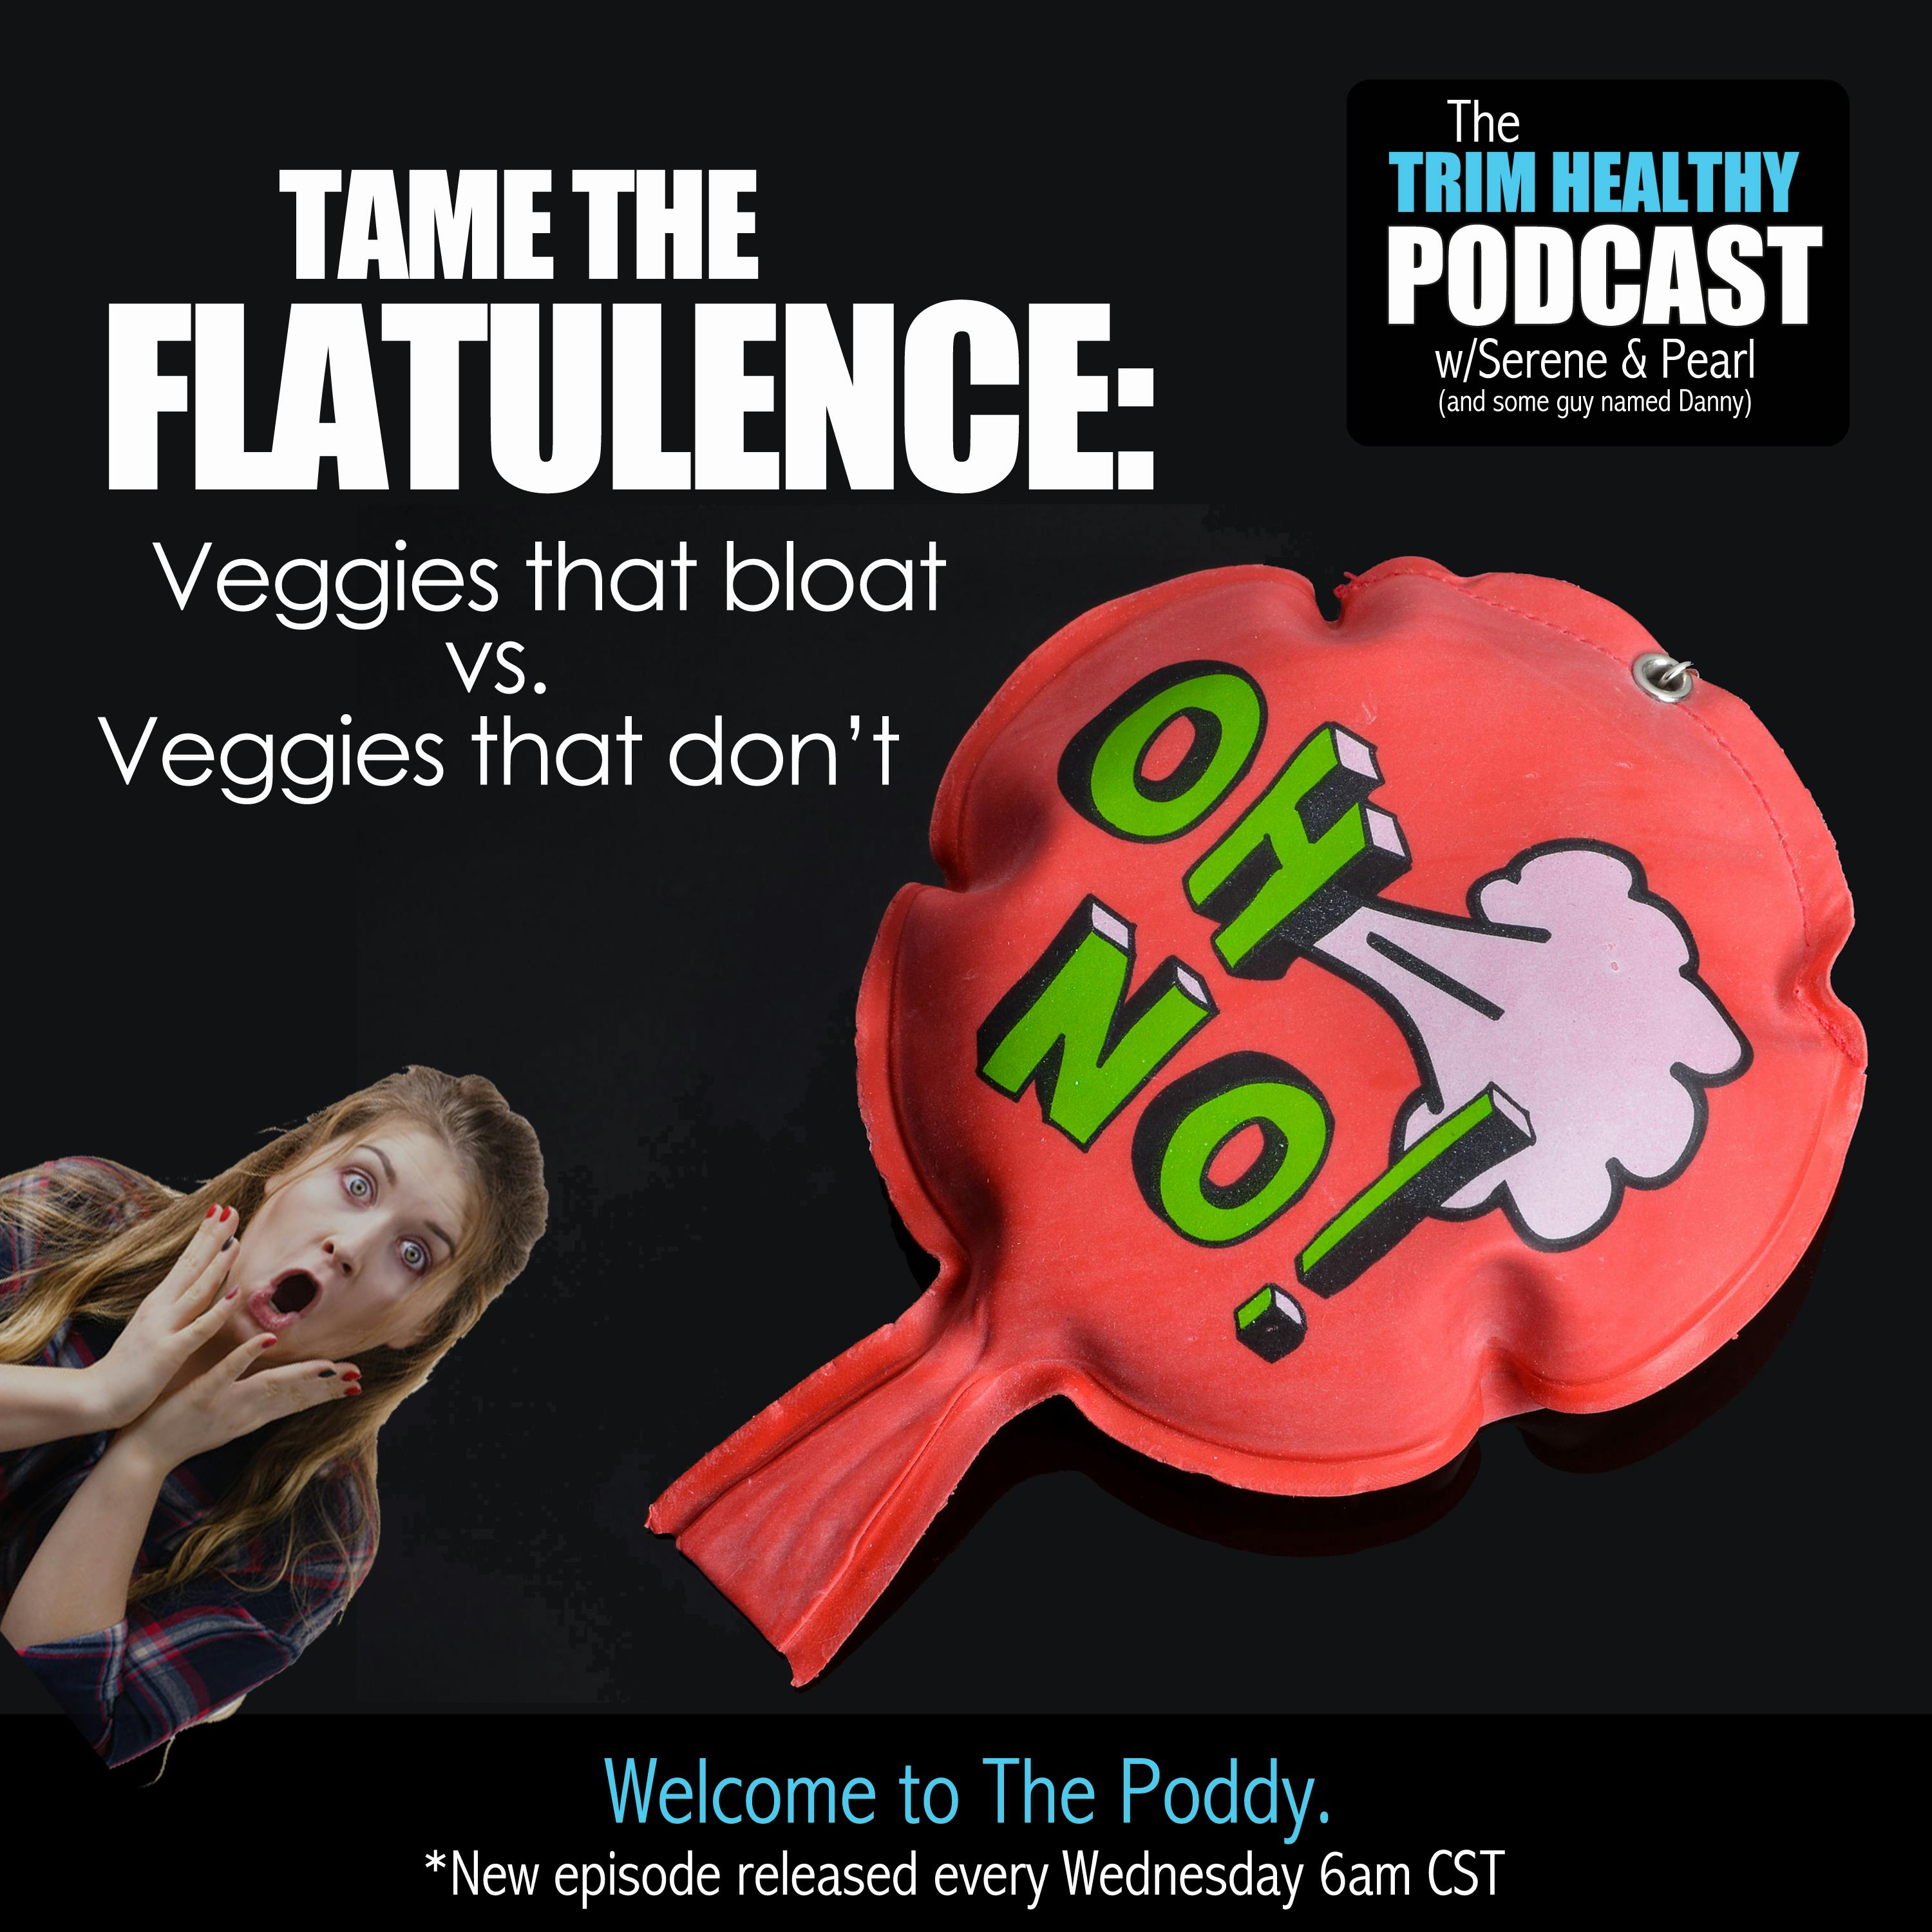 Ep. 134: Tame the flatulence: Veggies that bloat vs. veggies that don’t.